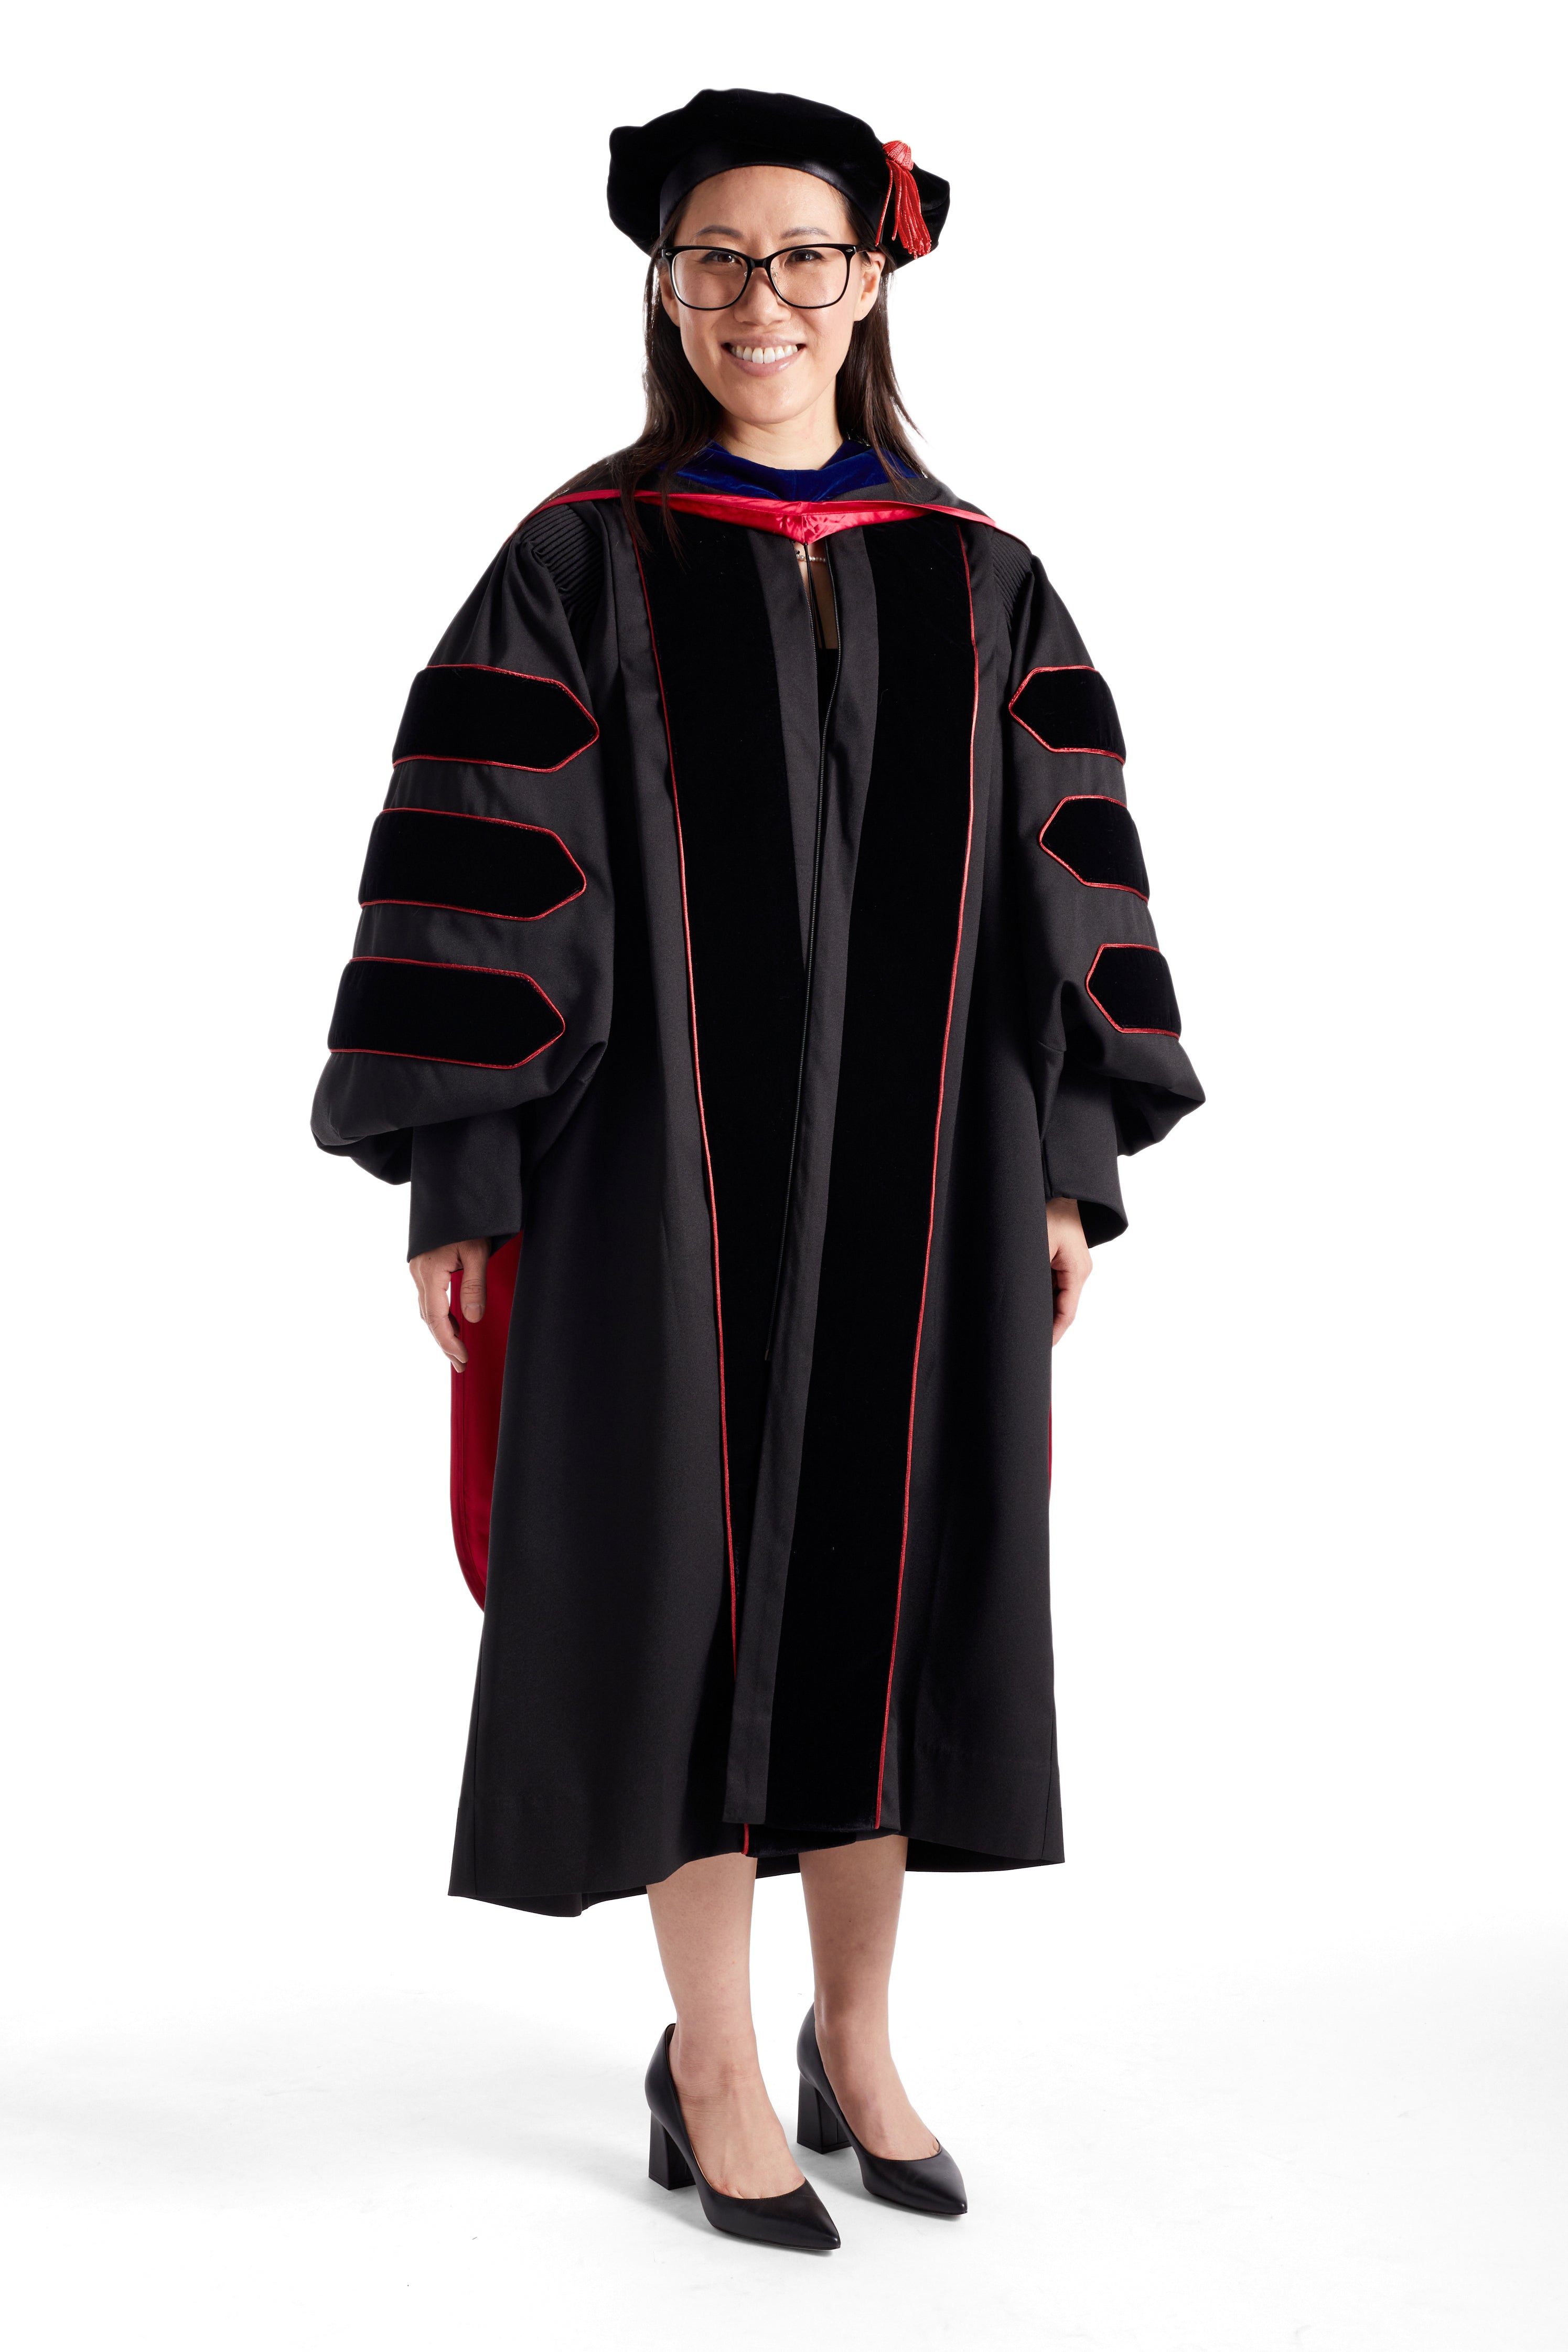 Child Shiny Maroon Graduation Cap & Gown - Preschool & Kindergarten –  Graduation Attire